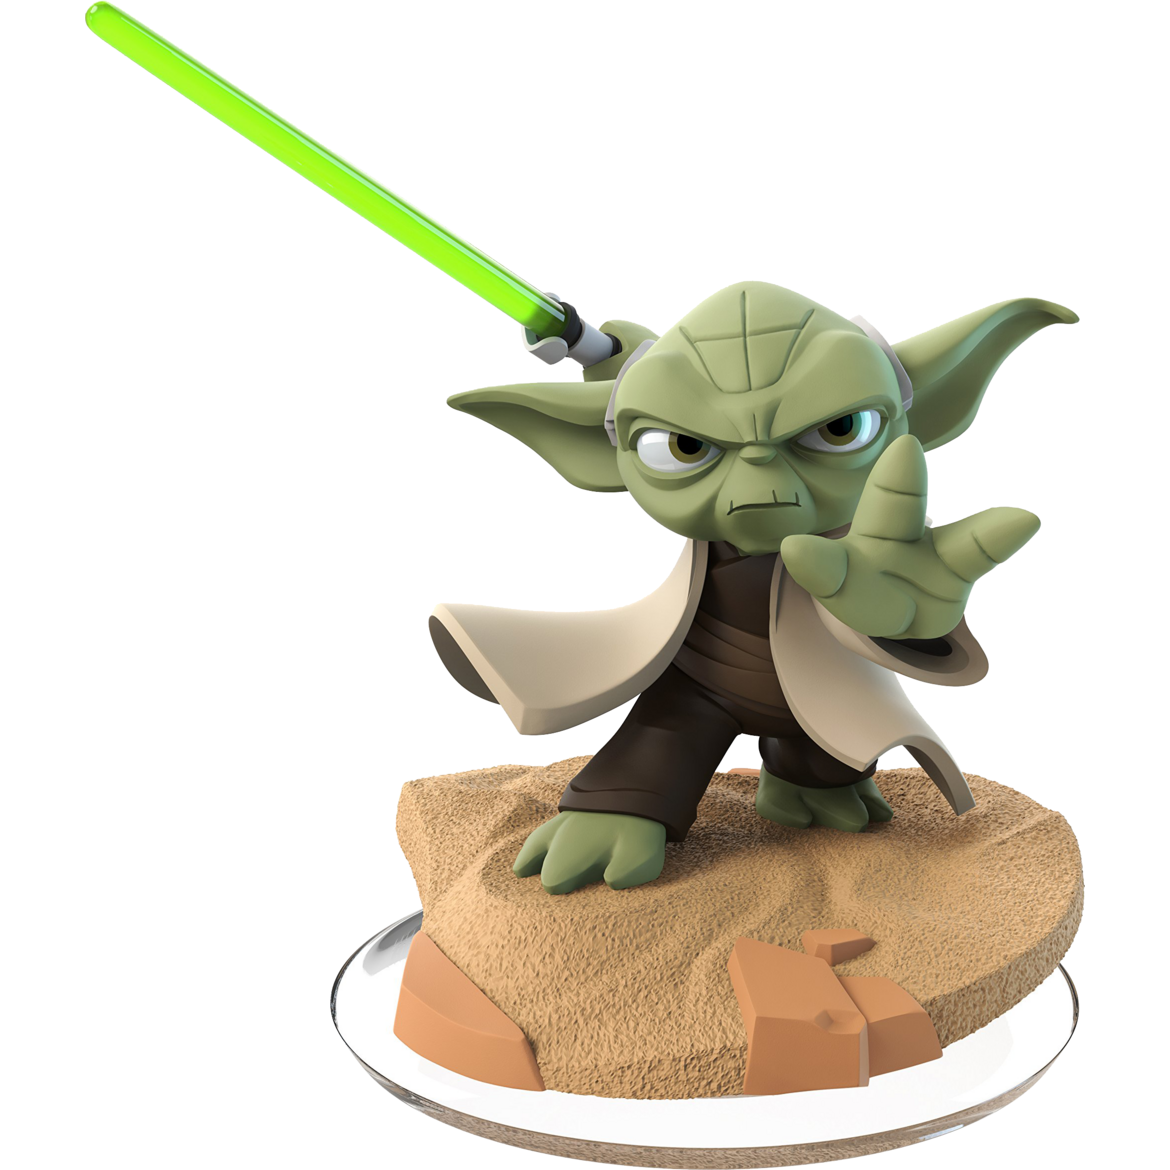 Disney Infinity 3.0 - Yoda Figure